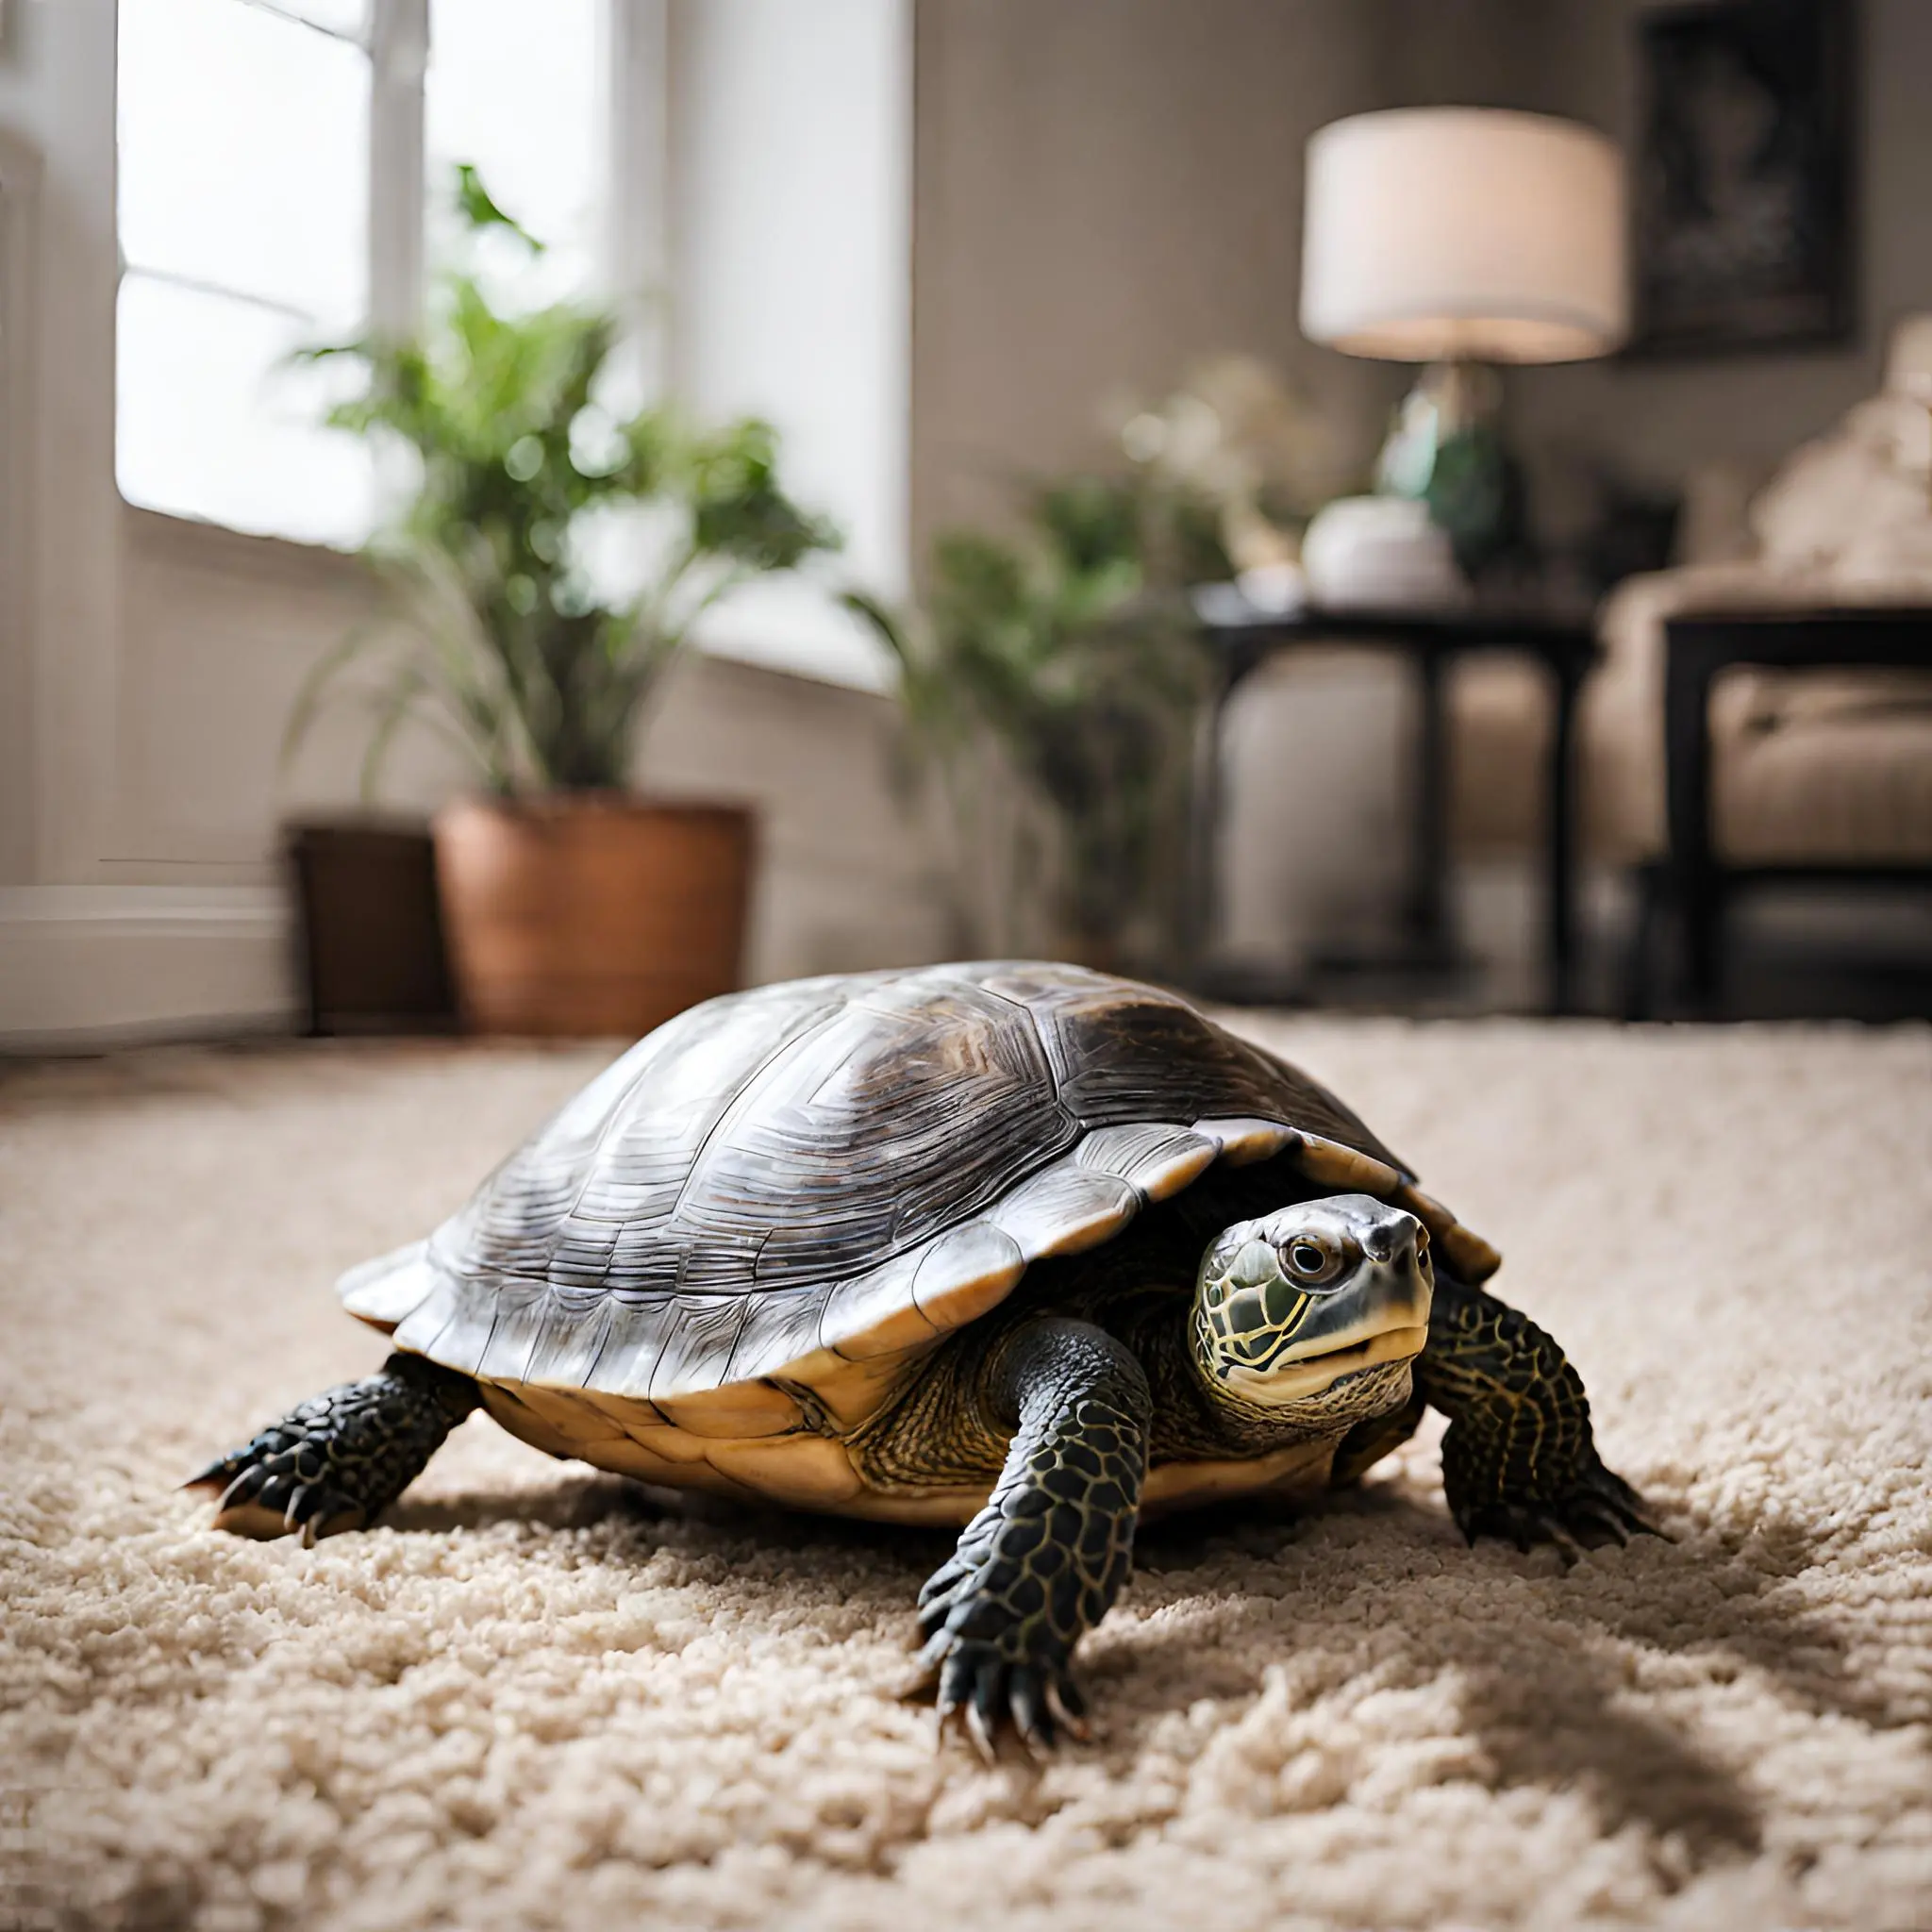 How Long Do Pet Turtles Live